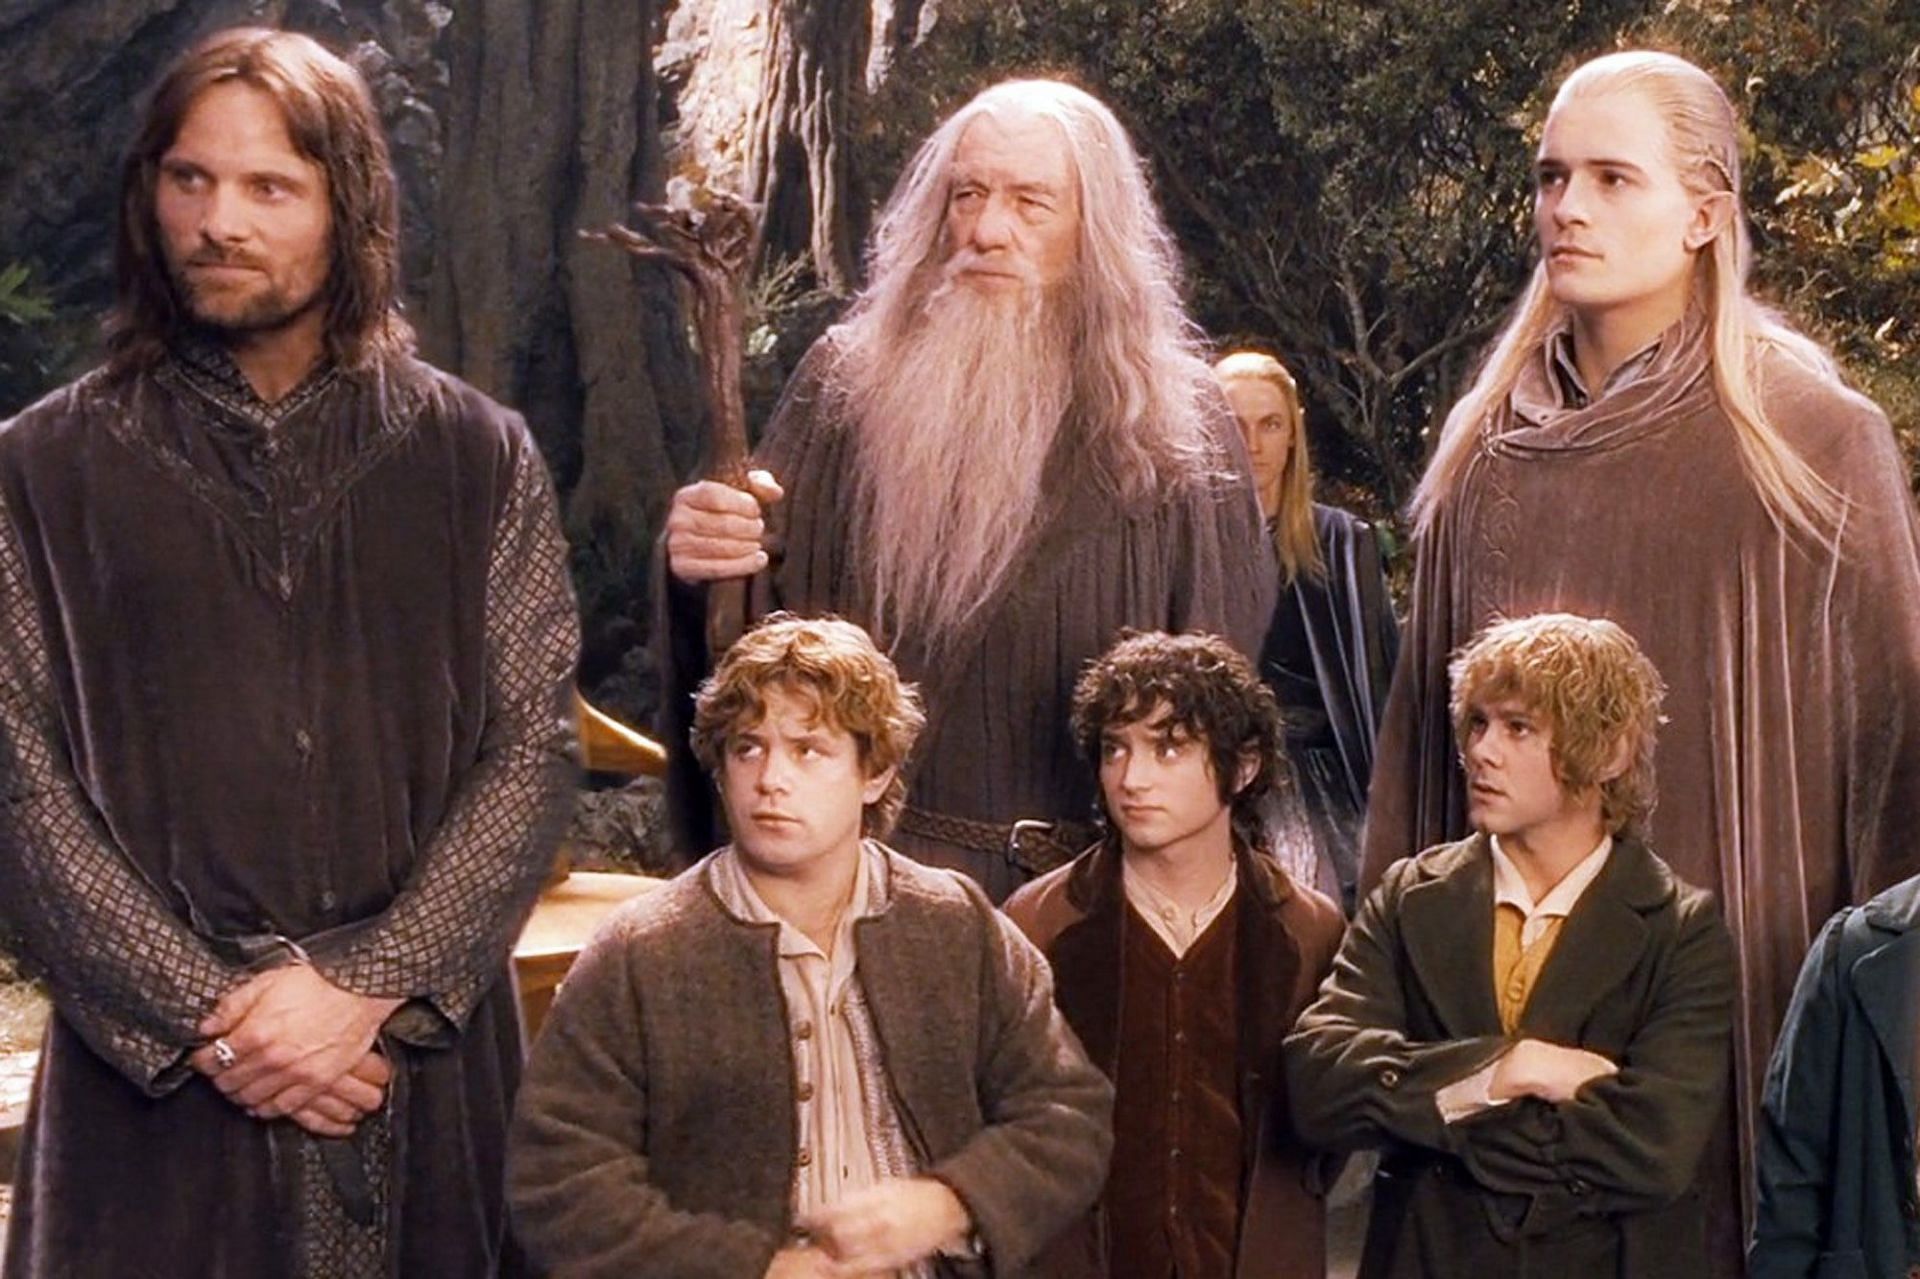 The Fellowship of the Ring (Image via New Line Cinema)